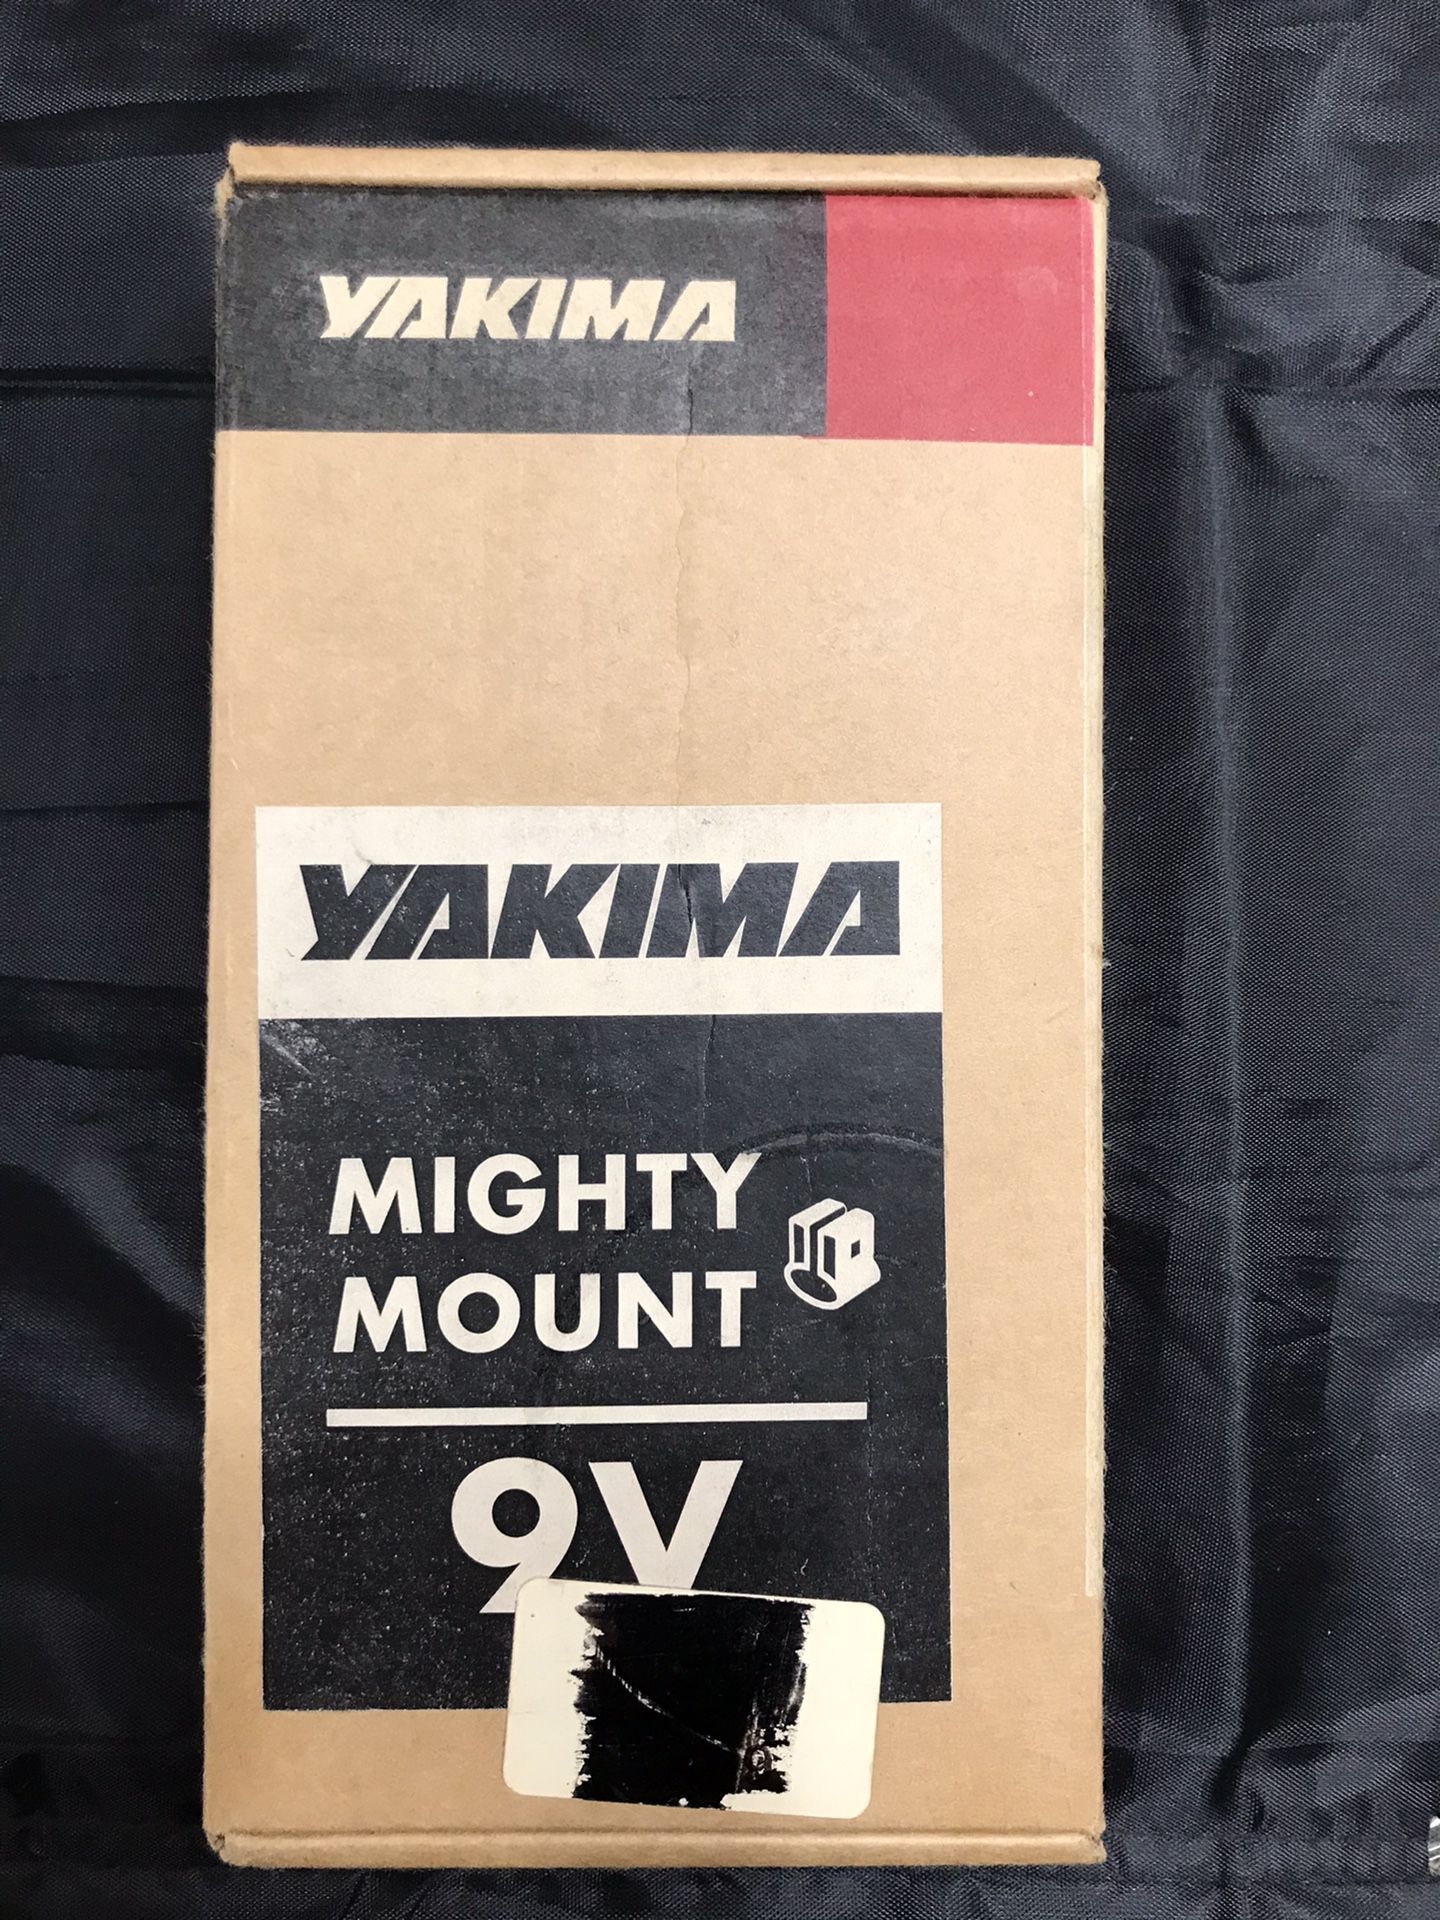 Yakima Mighty Mount - 9V